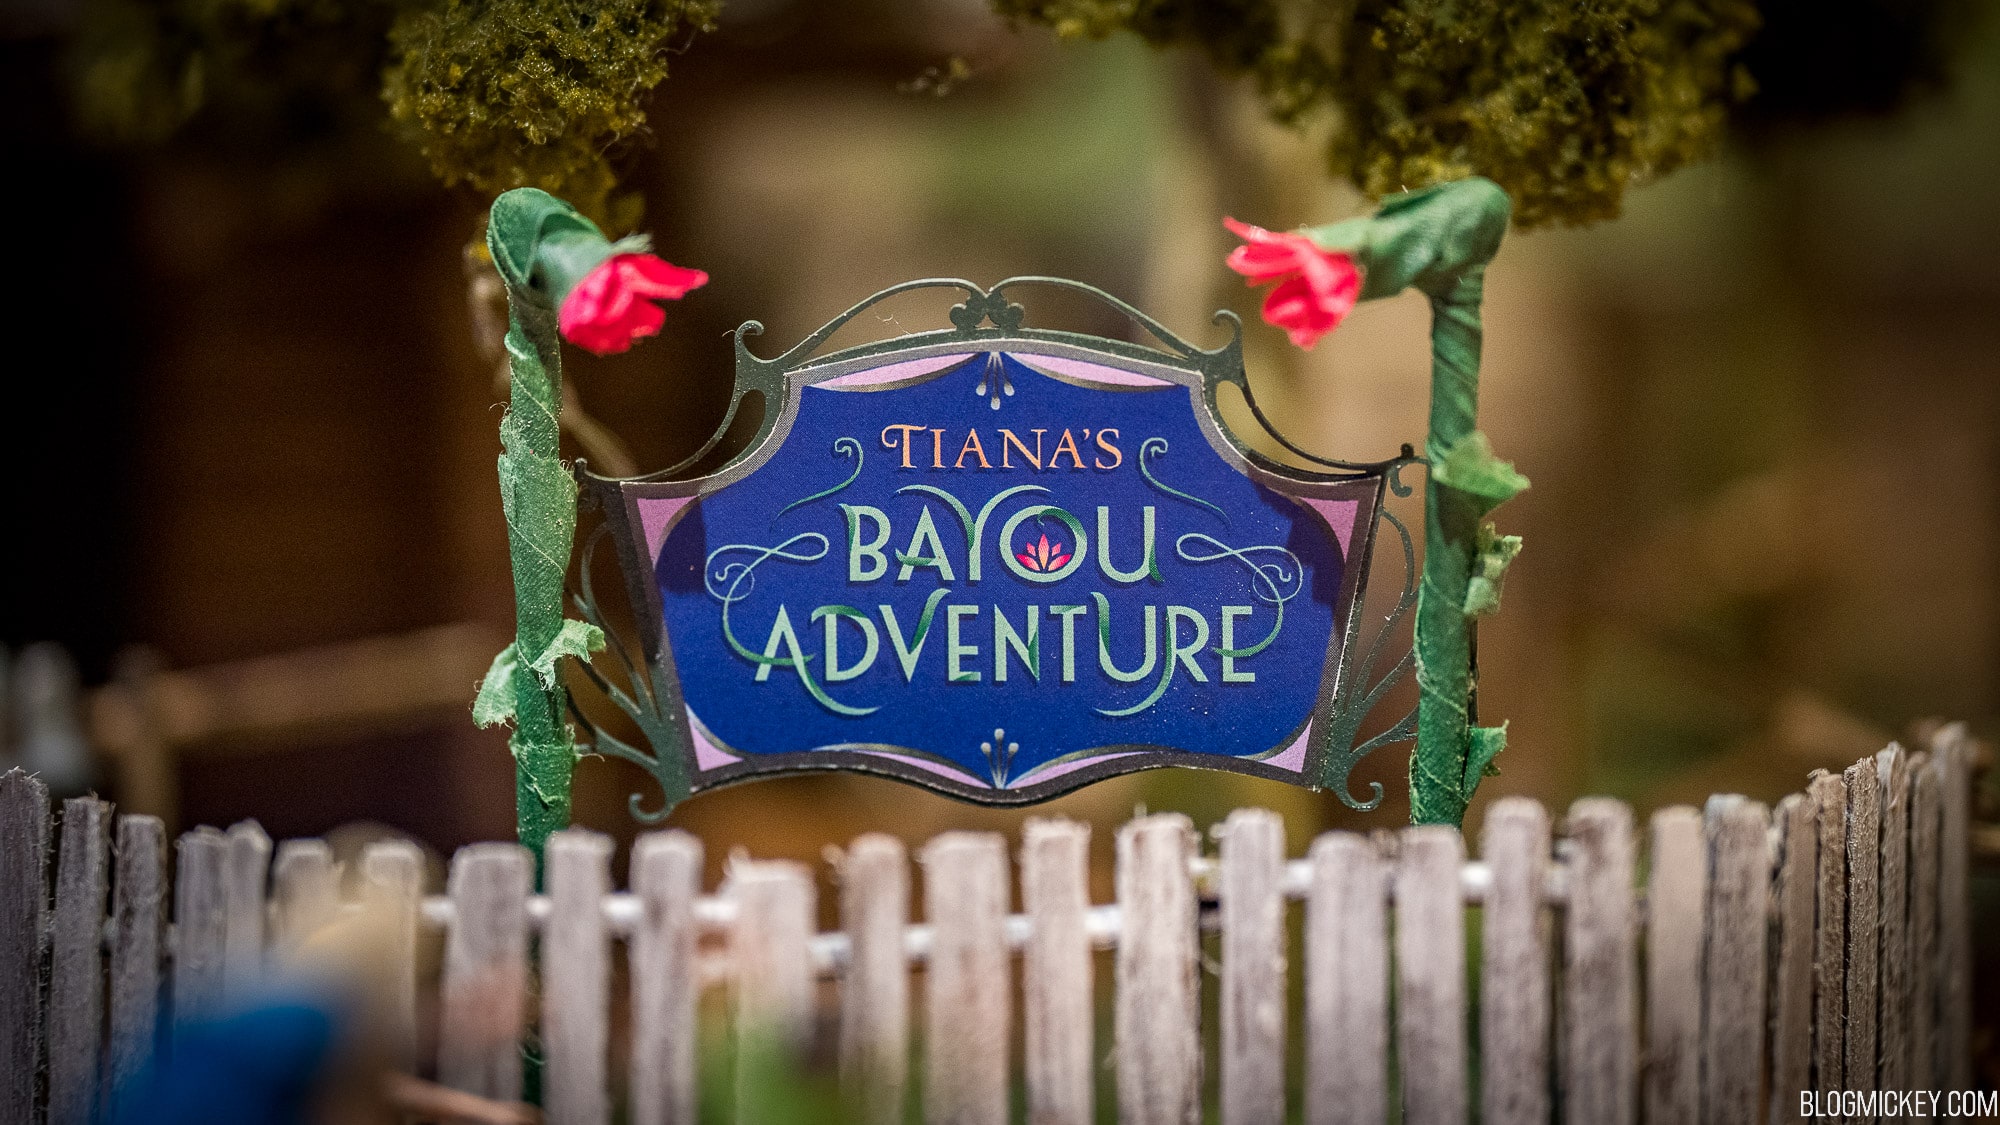 Walt Disney Imagineering Files Permit To Begin Construction of Tiana’s Bayou Adventure at Magic Kingdom